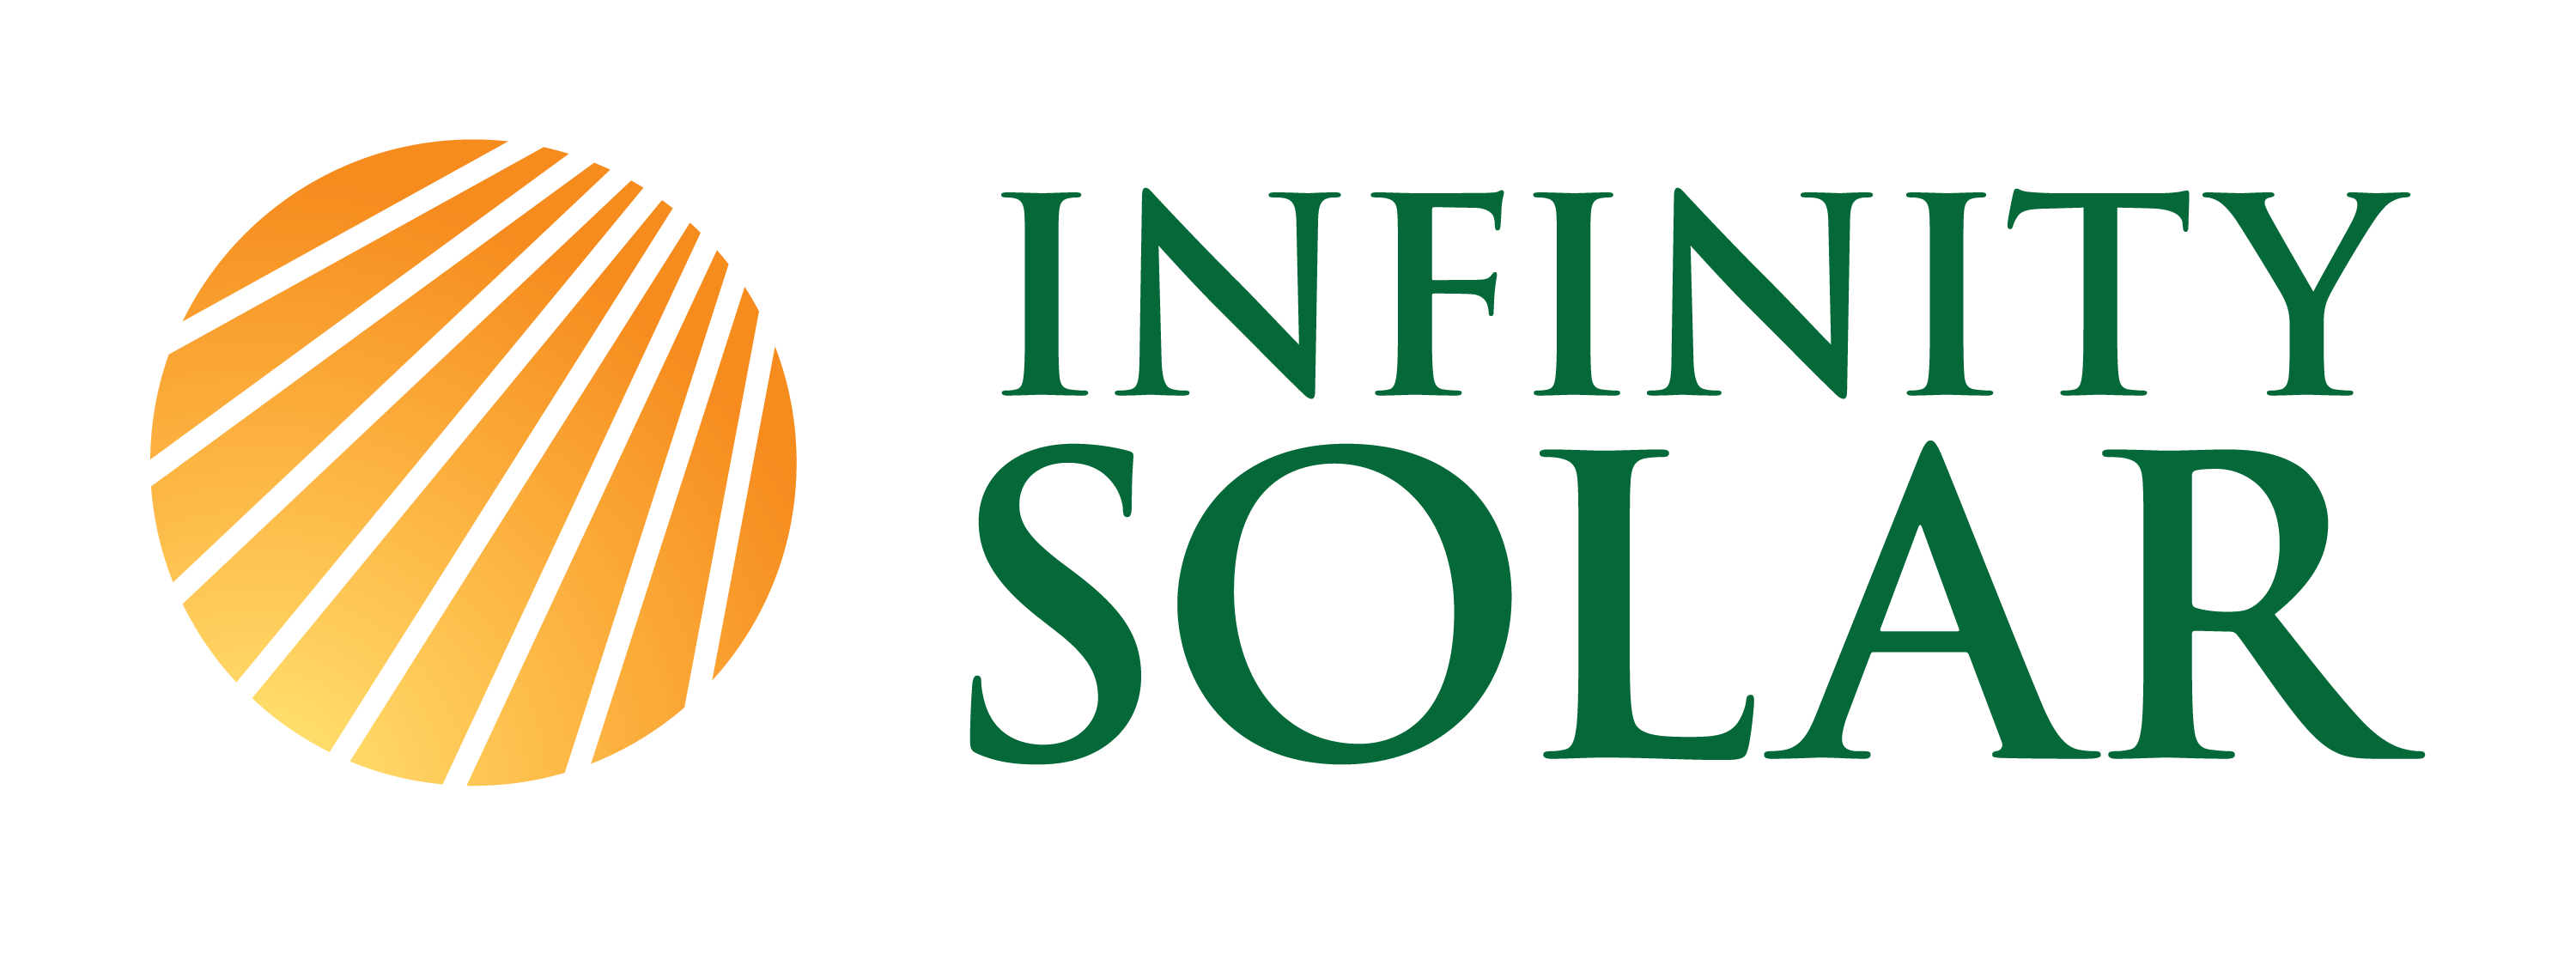 Infinity Solar Group